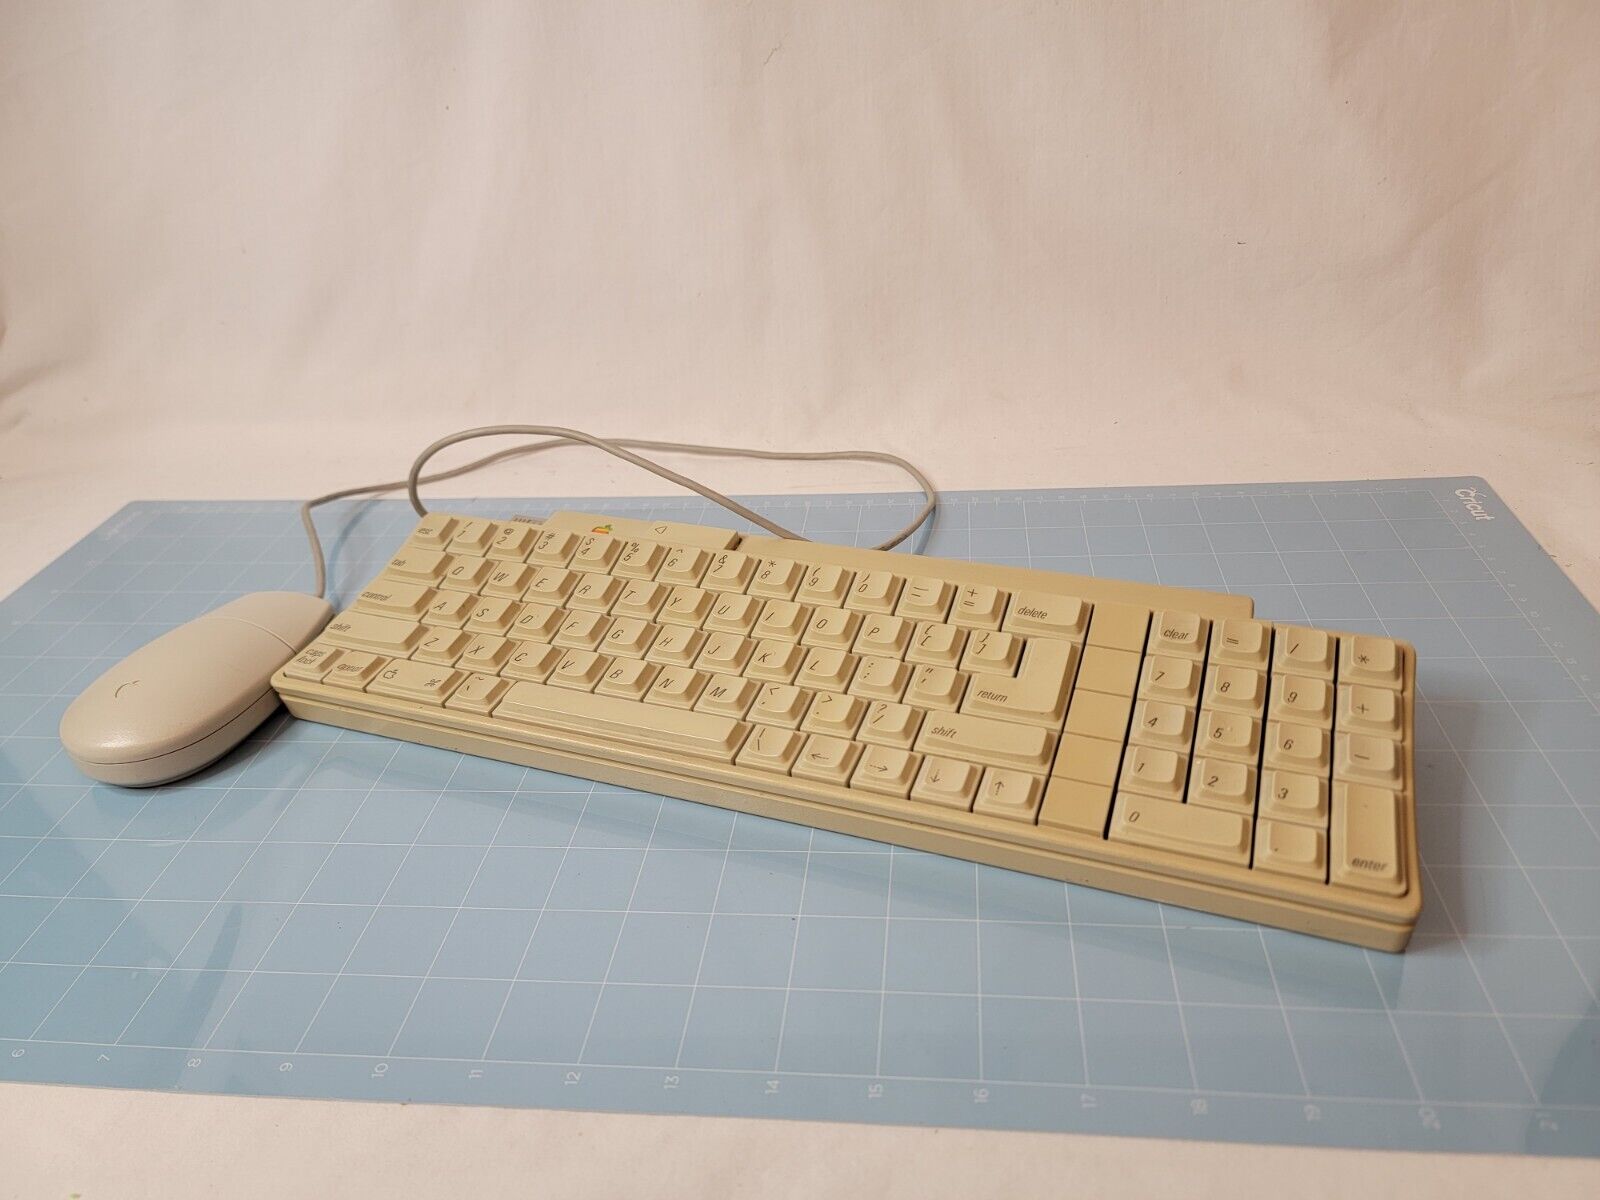 Apple Desktop Bus Keyboard A9M0330 W/ Mouse M2706 VINTAGE | WORKING